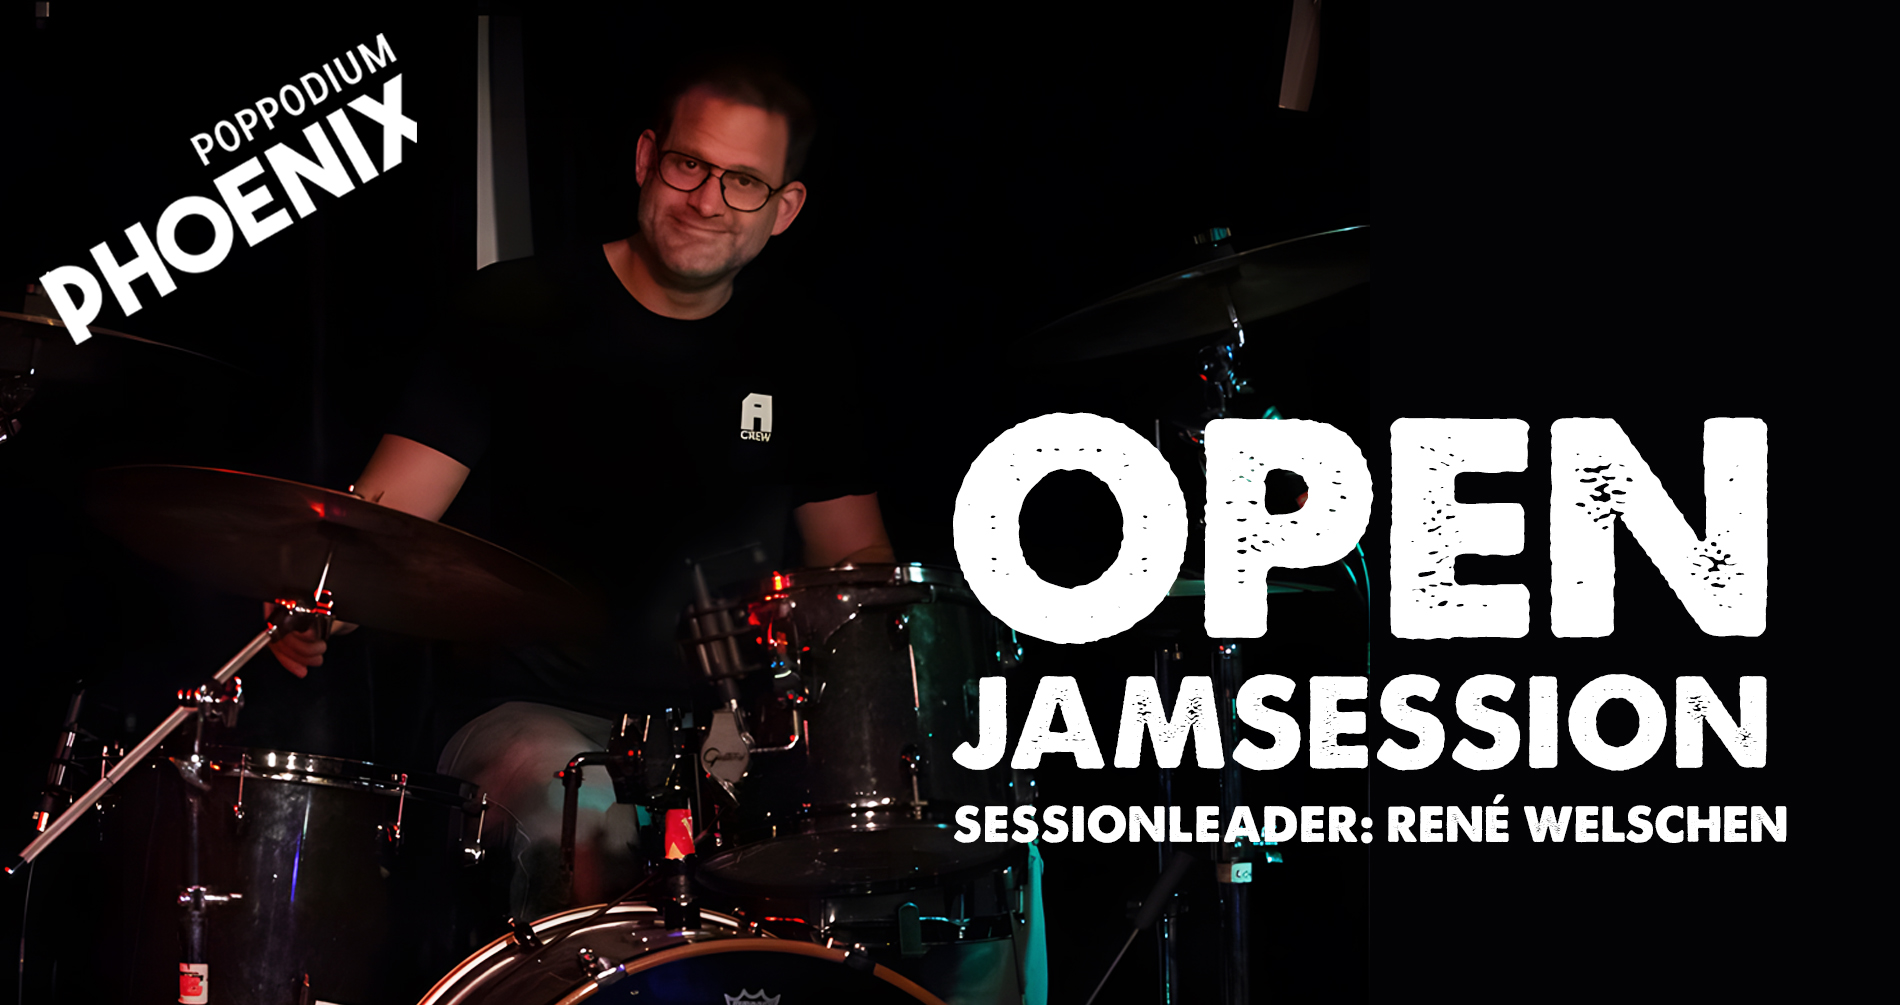 Sunday Jamsession (Sessionleader: René Welschen!)